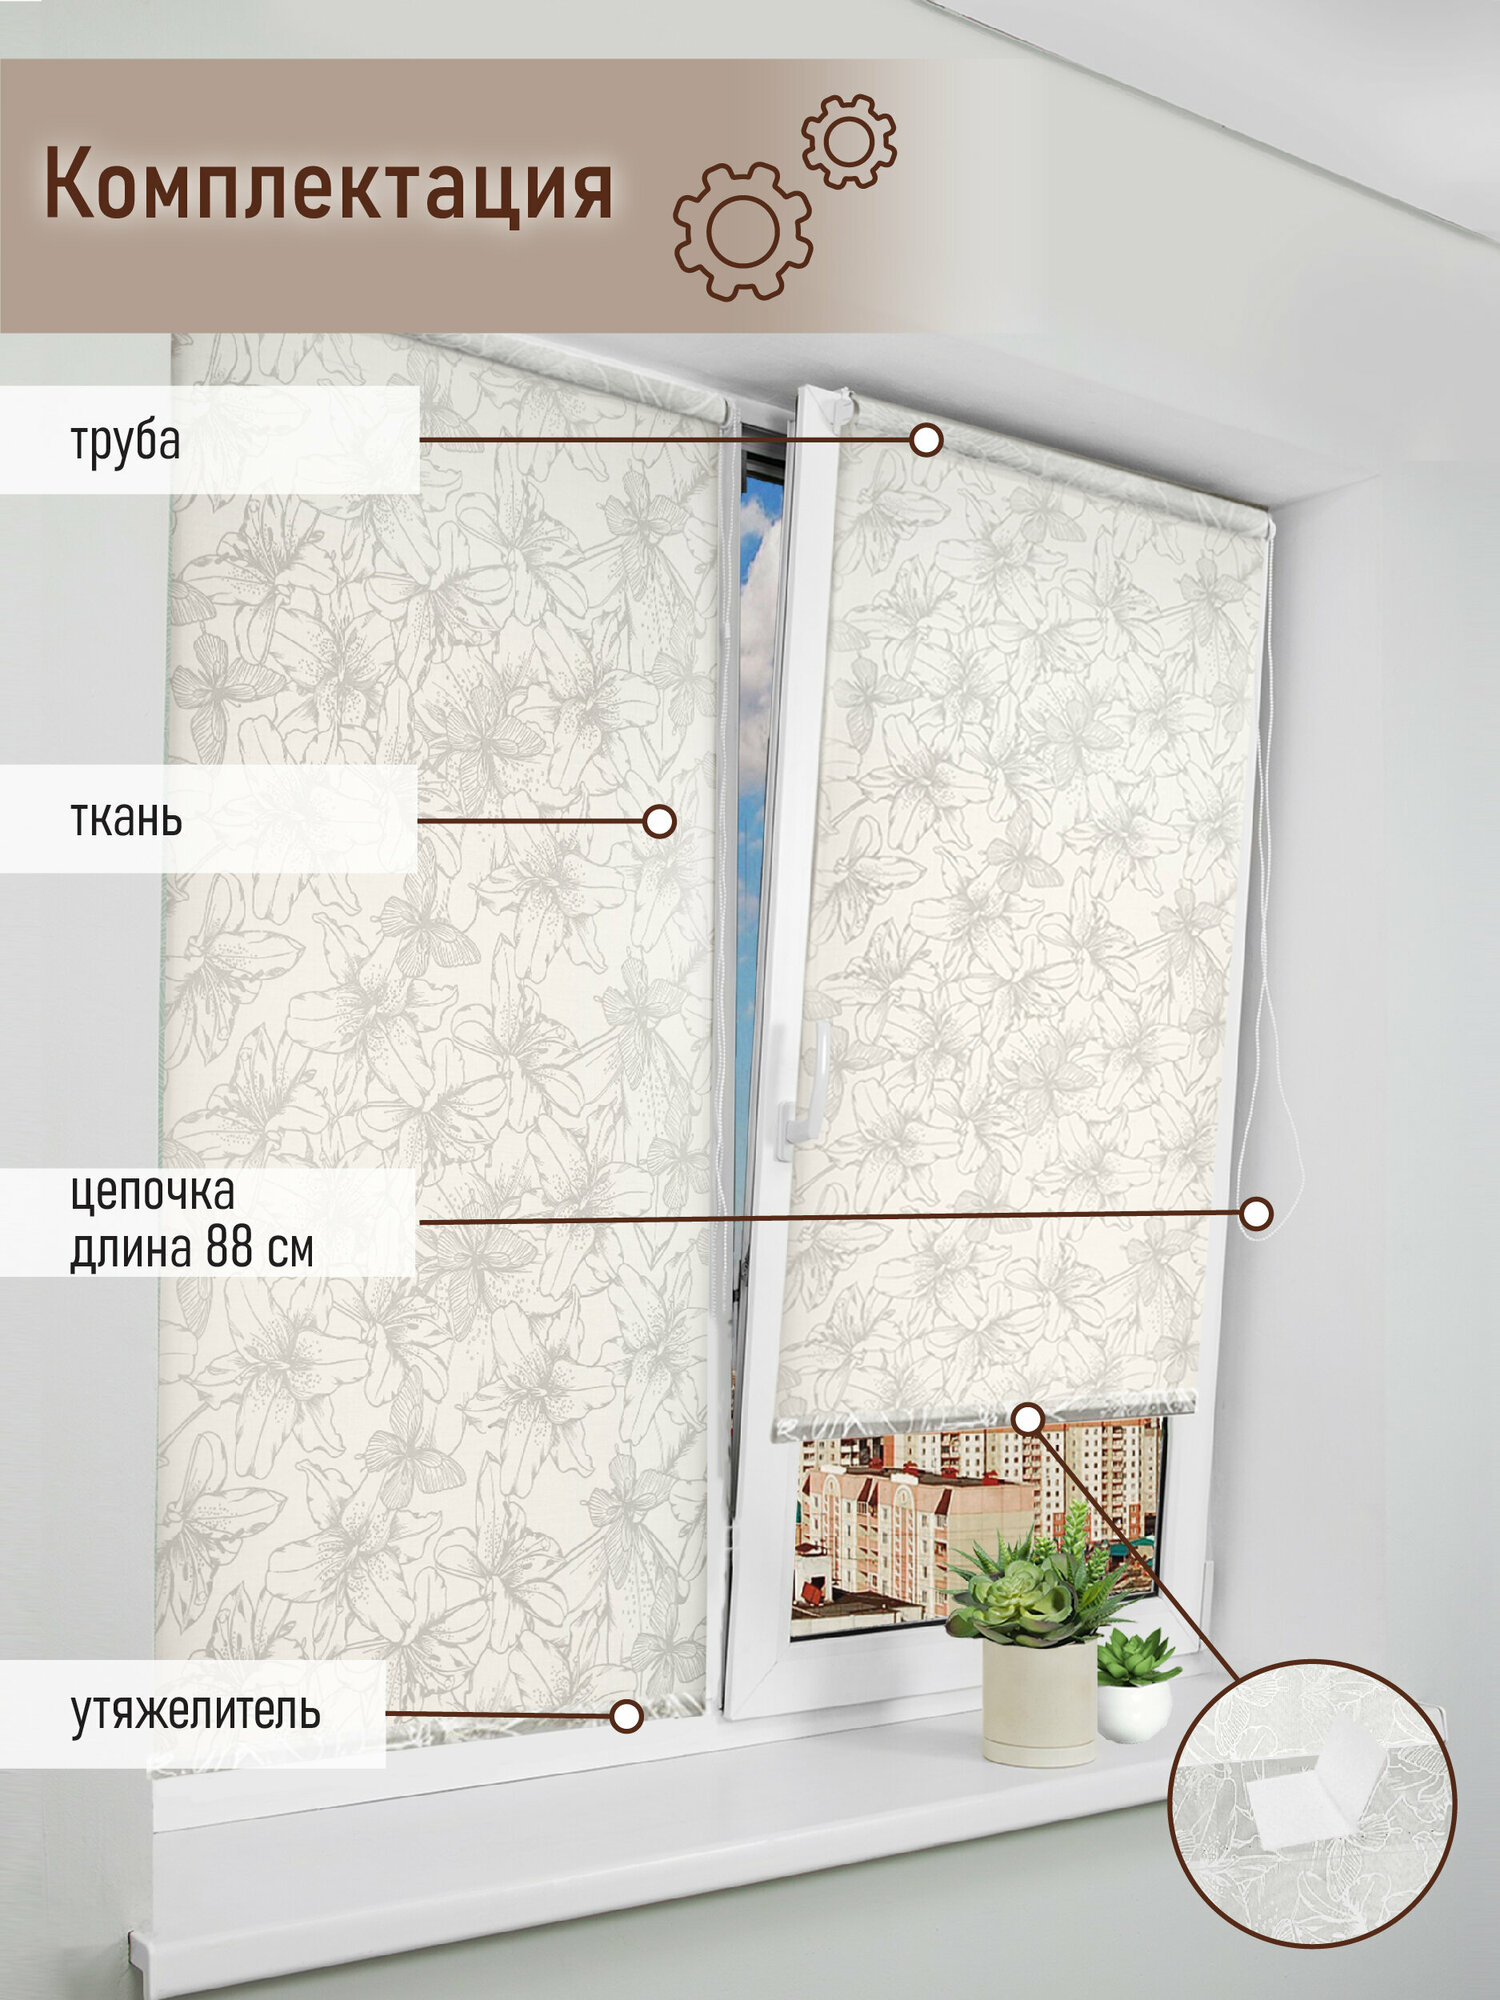 Рулонные шторы Амелия, белый, 98х160 см